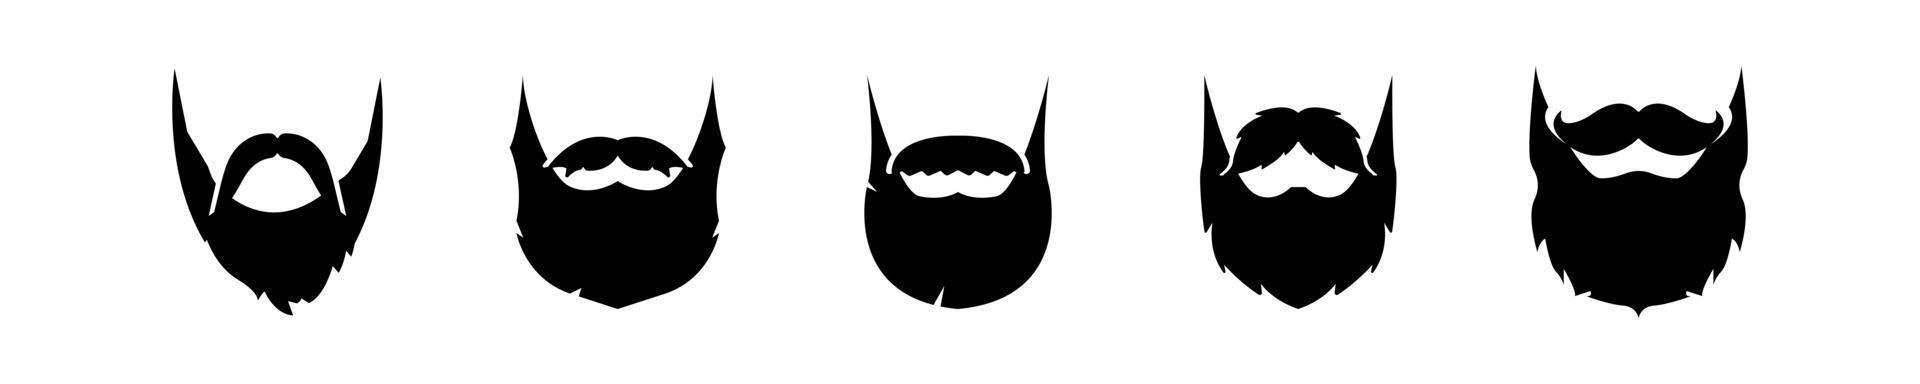 gentelman com logotipo de barba. ilustração vetorial vetor